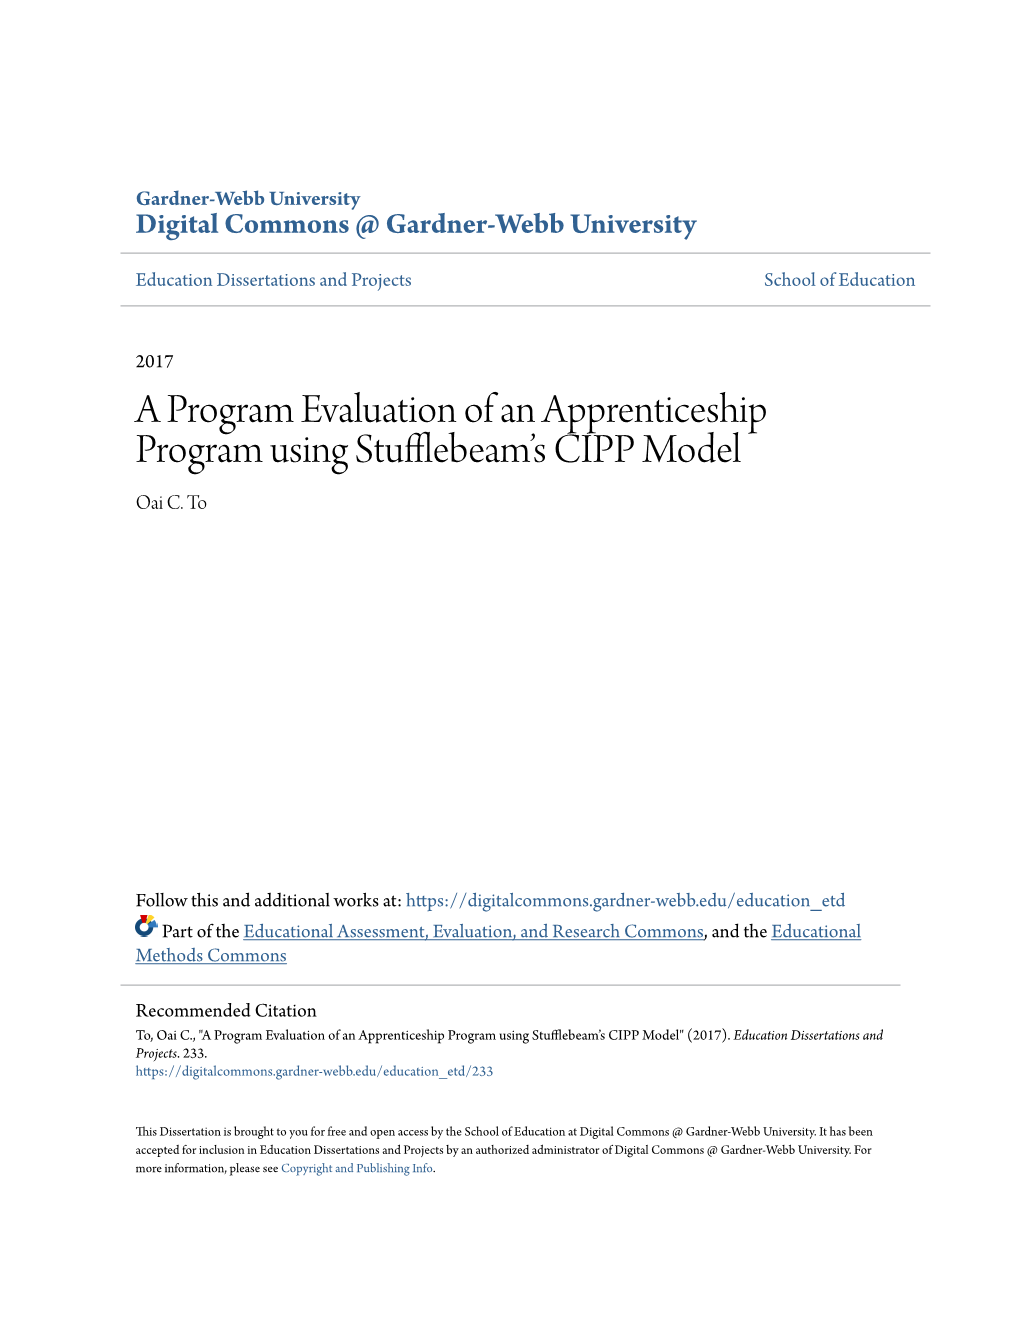 A Program Evaluation of an Apprenticeship Program Using Stufflebeam’S CIPP Model Oai C